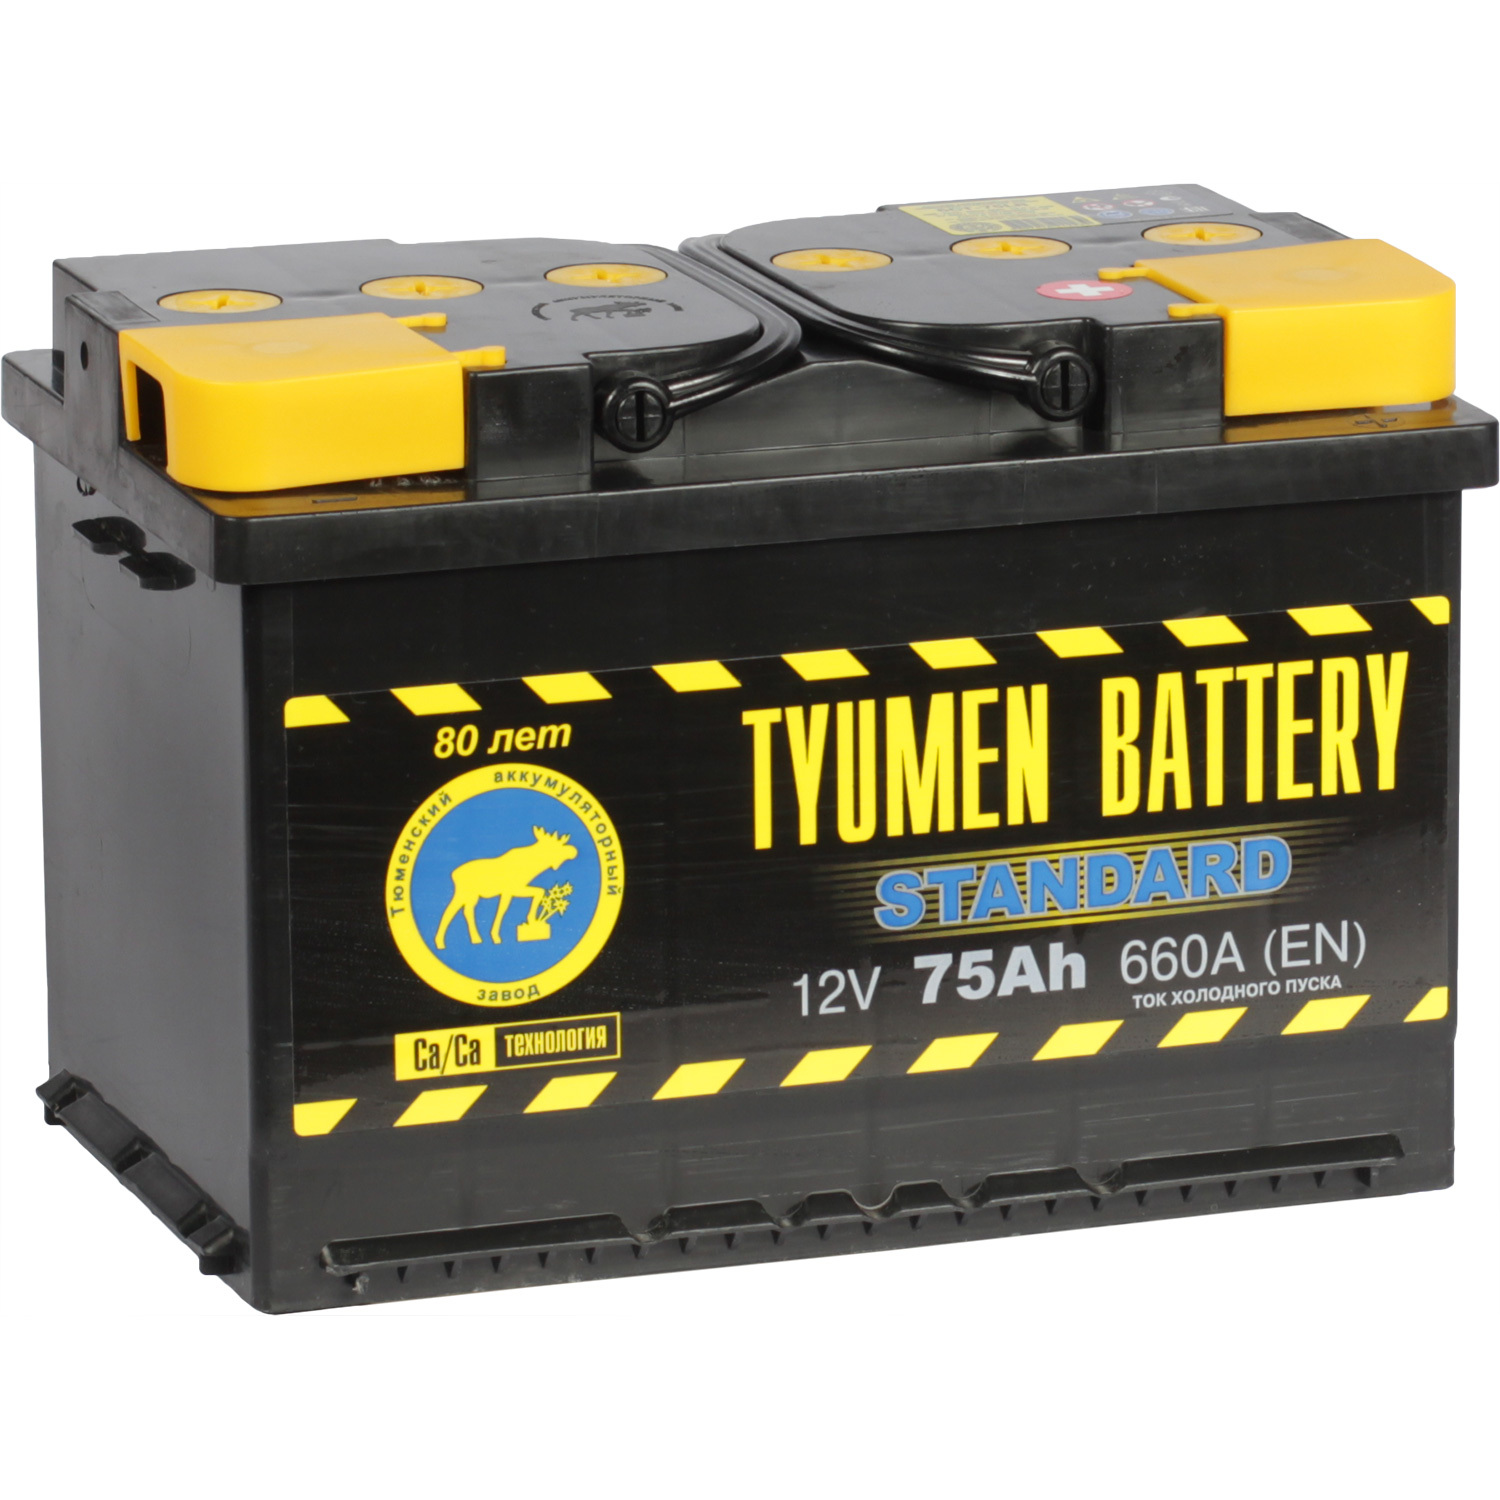 Tyumen Battery Автомобильный аккумулятор Tyumen Battery Standard 75 Ач обратная полярность L3 tyumen battery автомобильный аккумулятор tyumen battery standard 55 ач прямая полярность l2